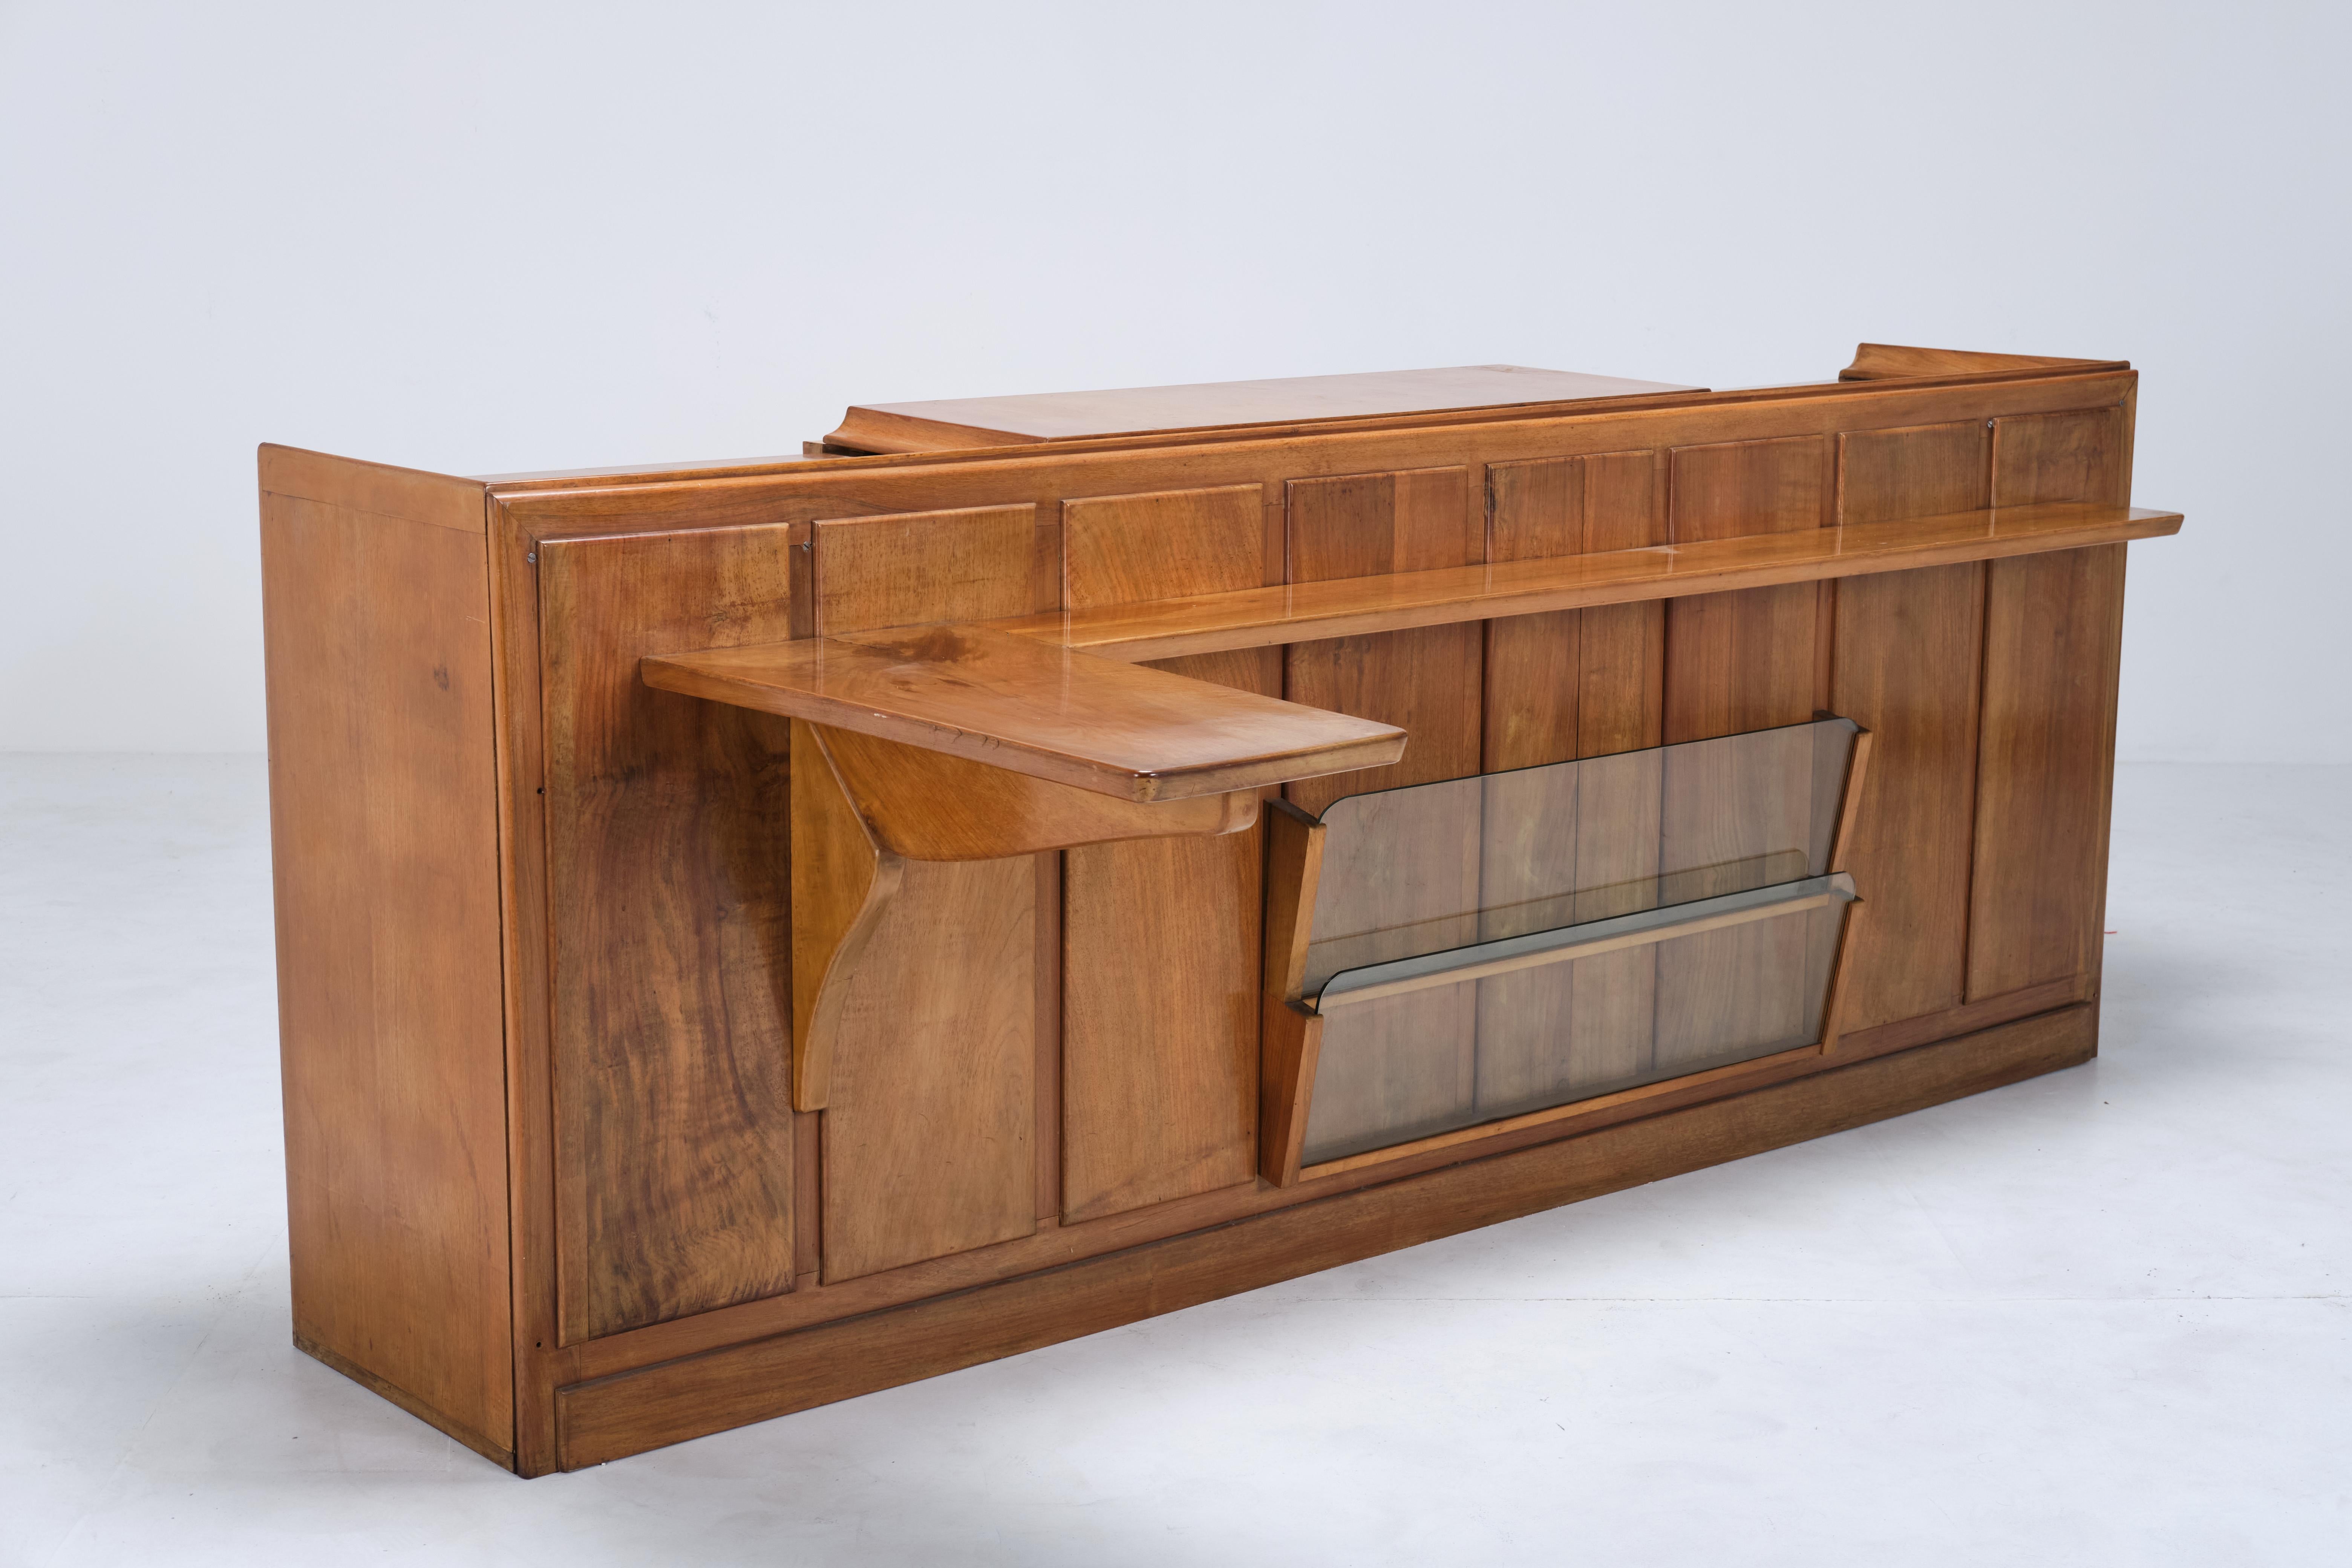 Wood Giuseppe Anzani Midcentury bar cabinet with stunning glazed ceramic panel - 1950 For Sale